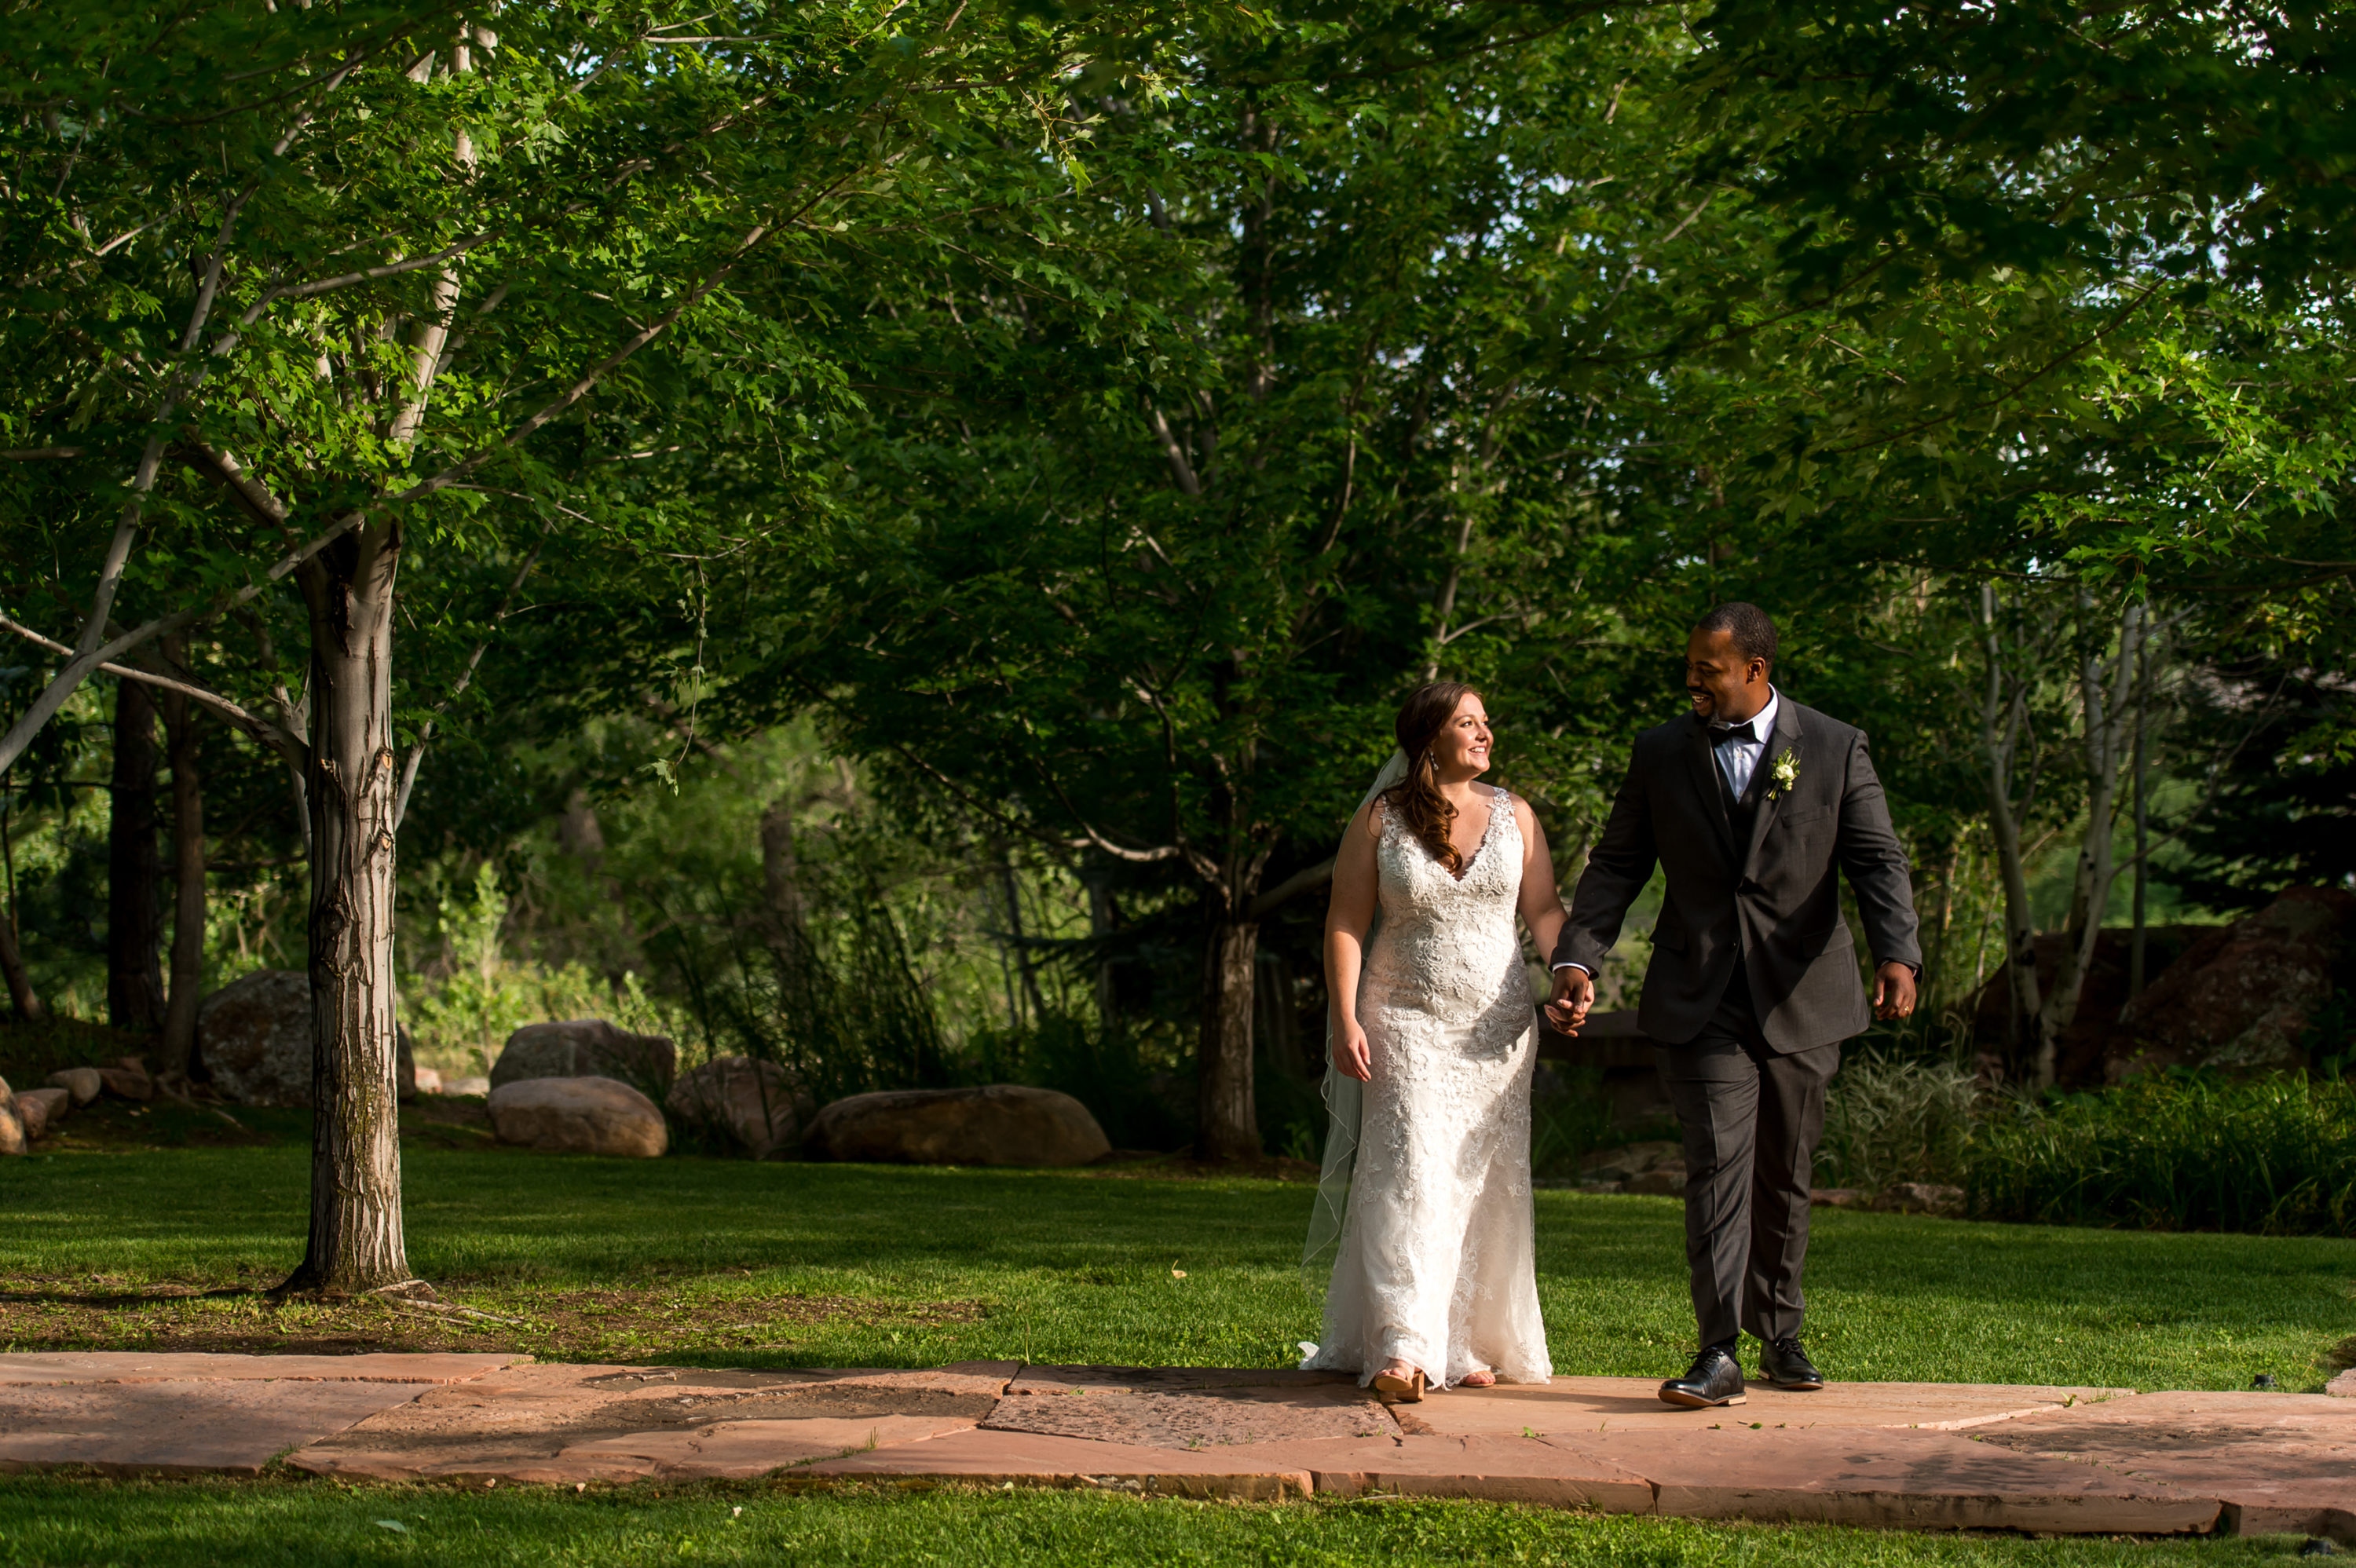 The bride and groom walk through the gardens during a Greenbriar Inn wedding in Boulder, Colorado.